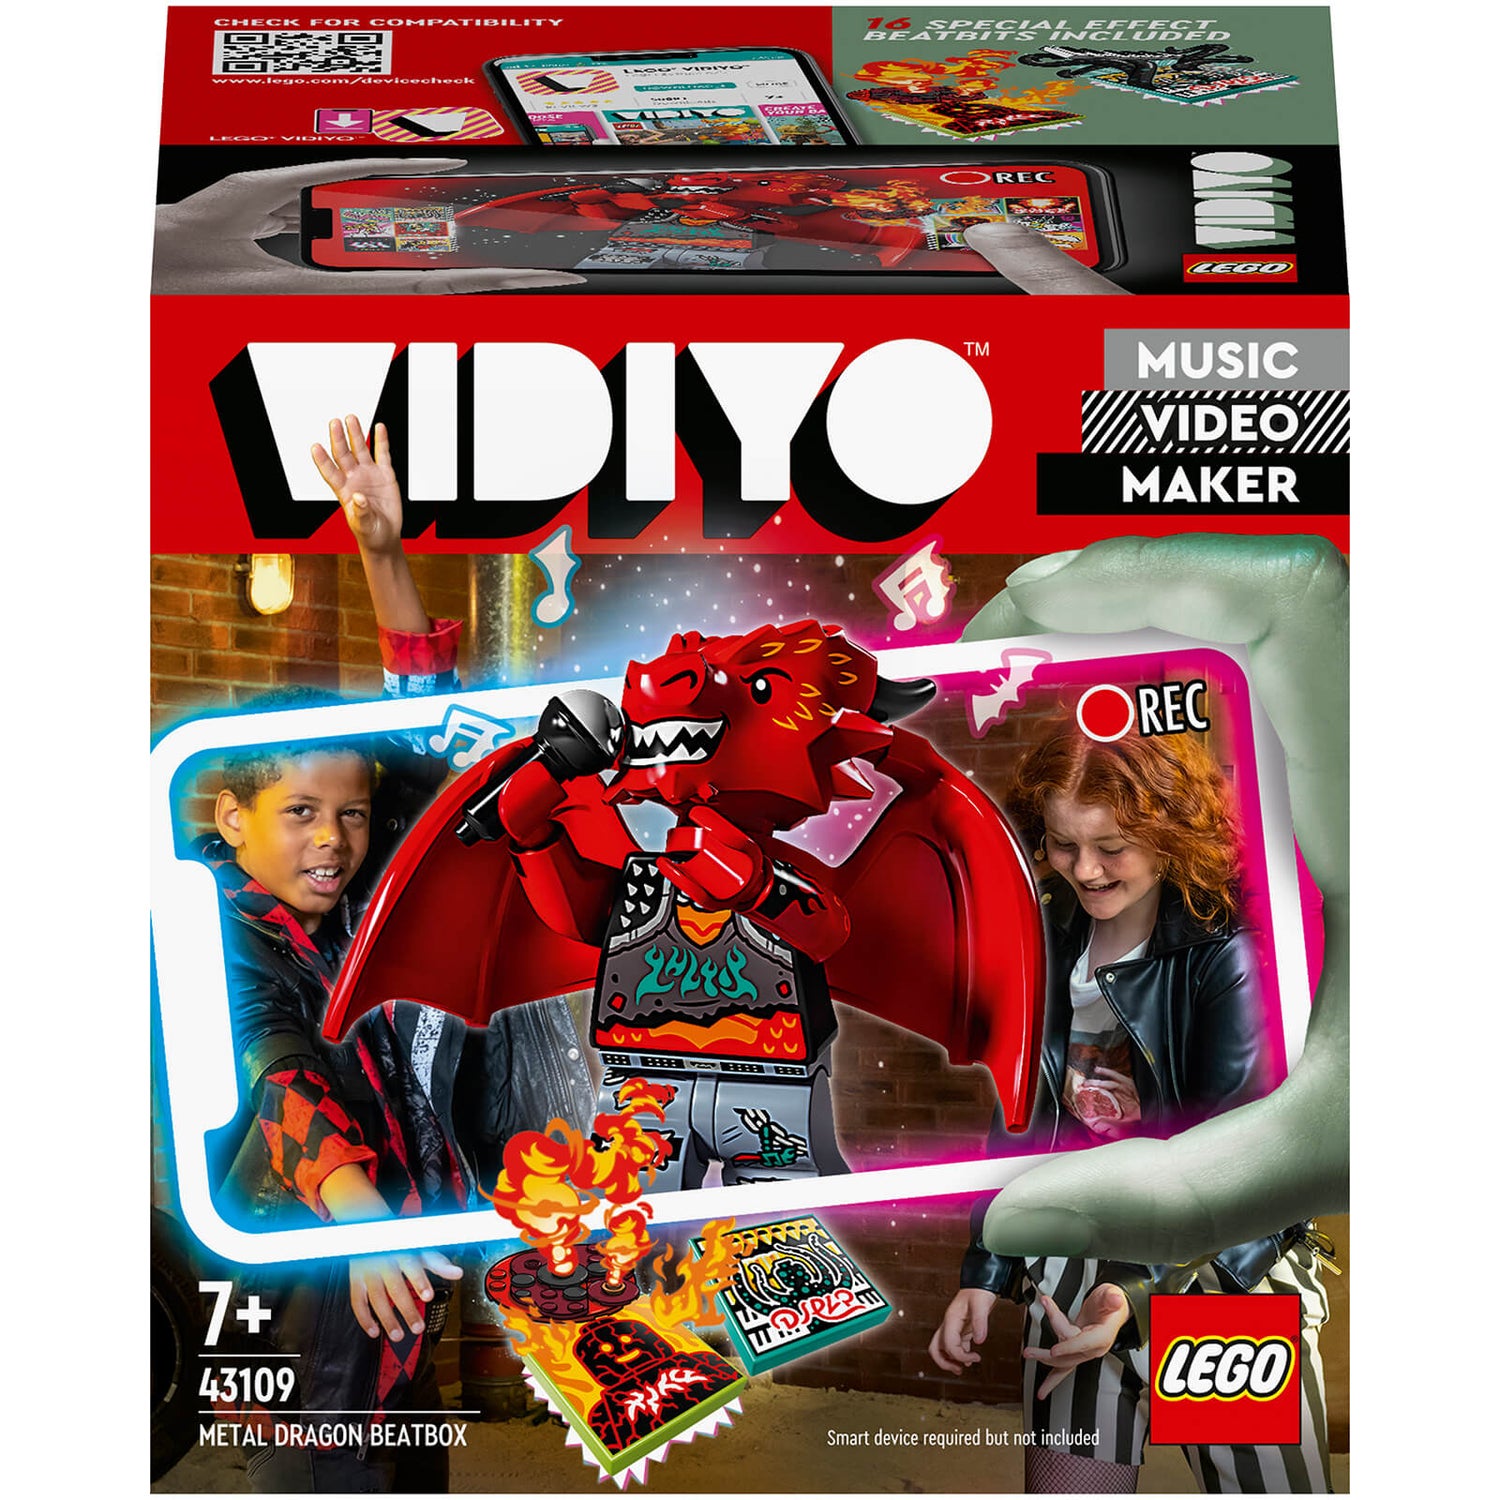 LEGO VIDIYO Metal Dragon BeatBox Music Video Maker Toy (43109)